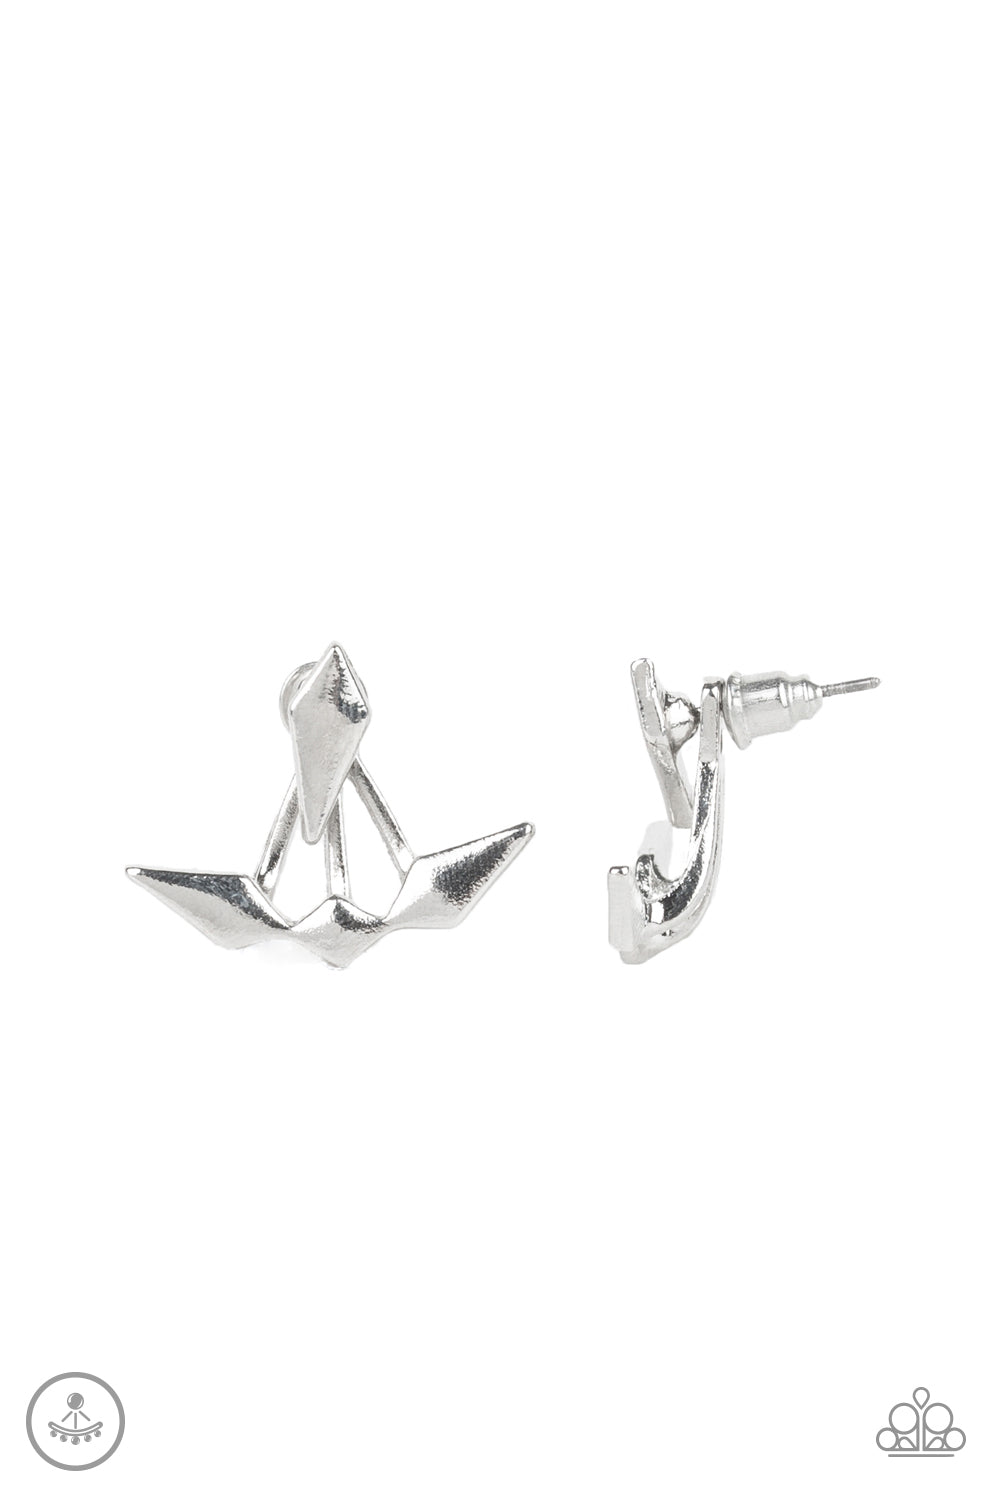 Paparazzi - Metal Origami - Silver Earrings